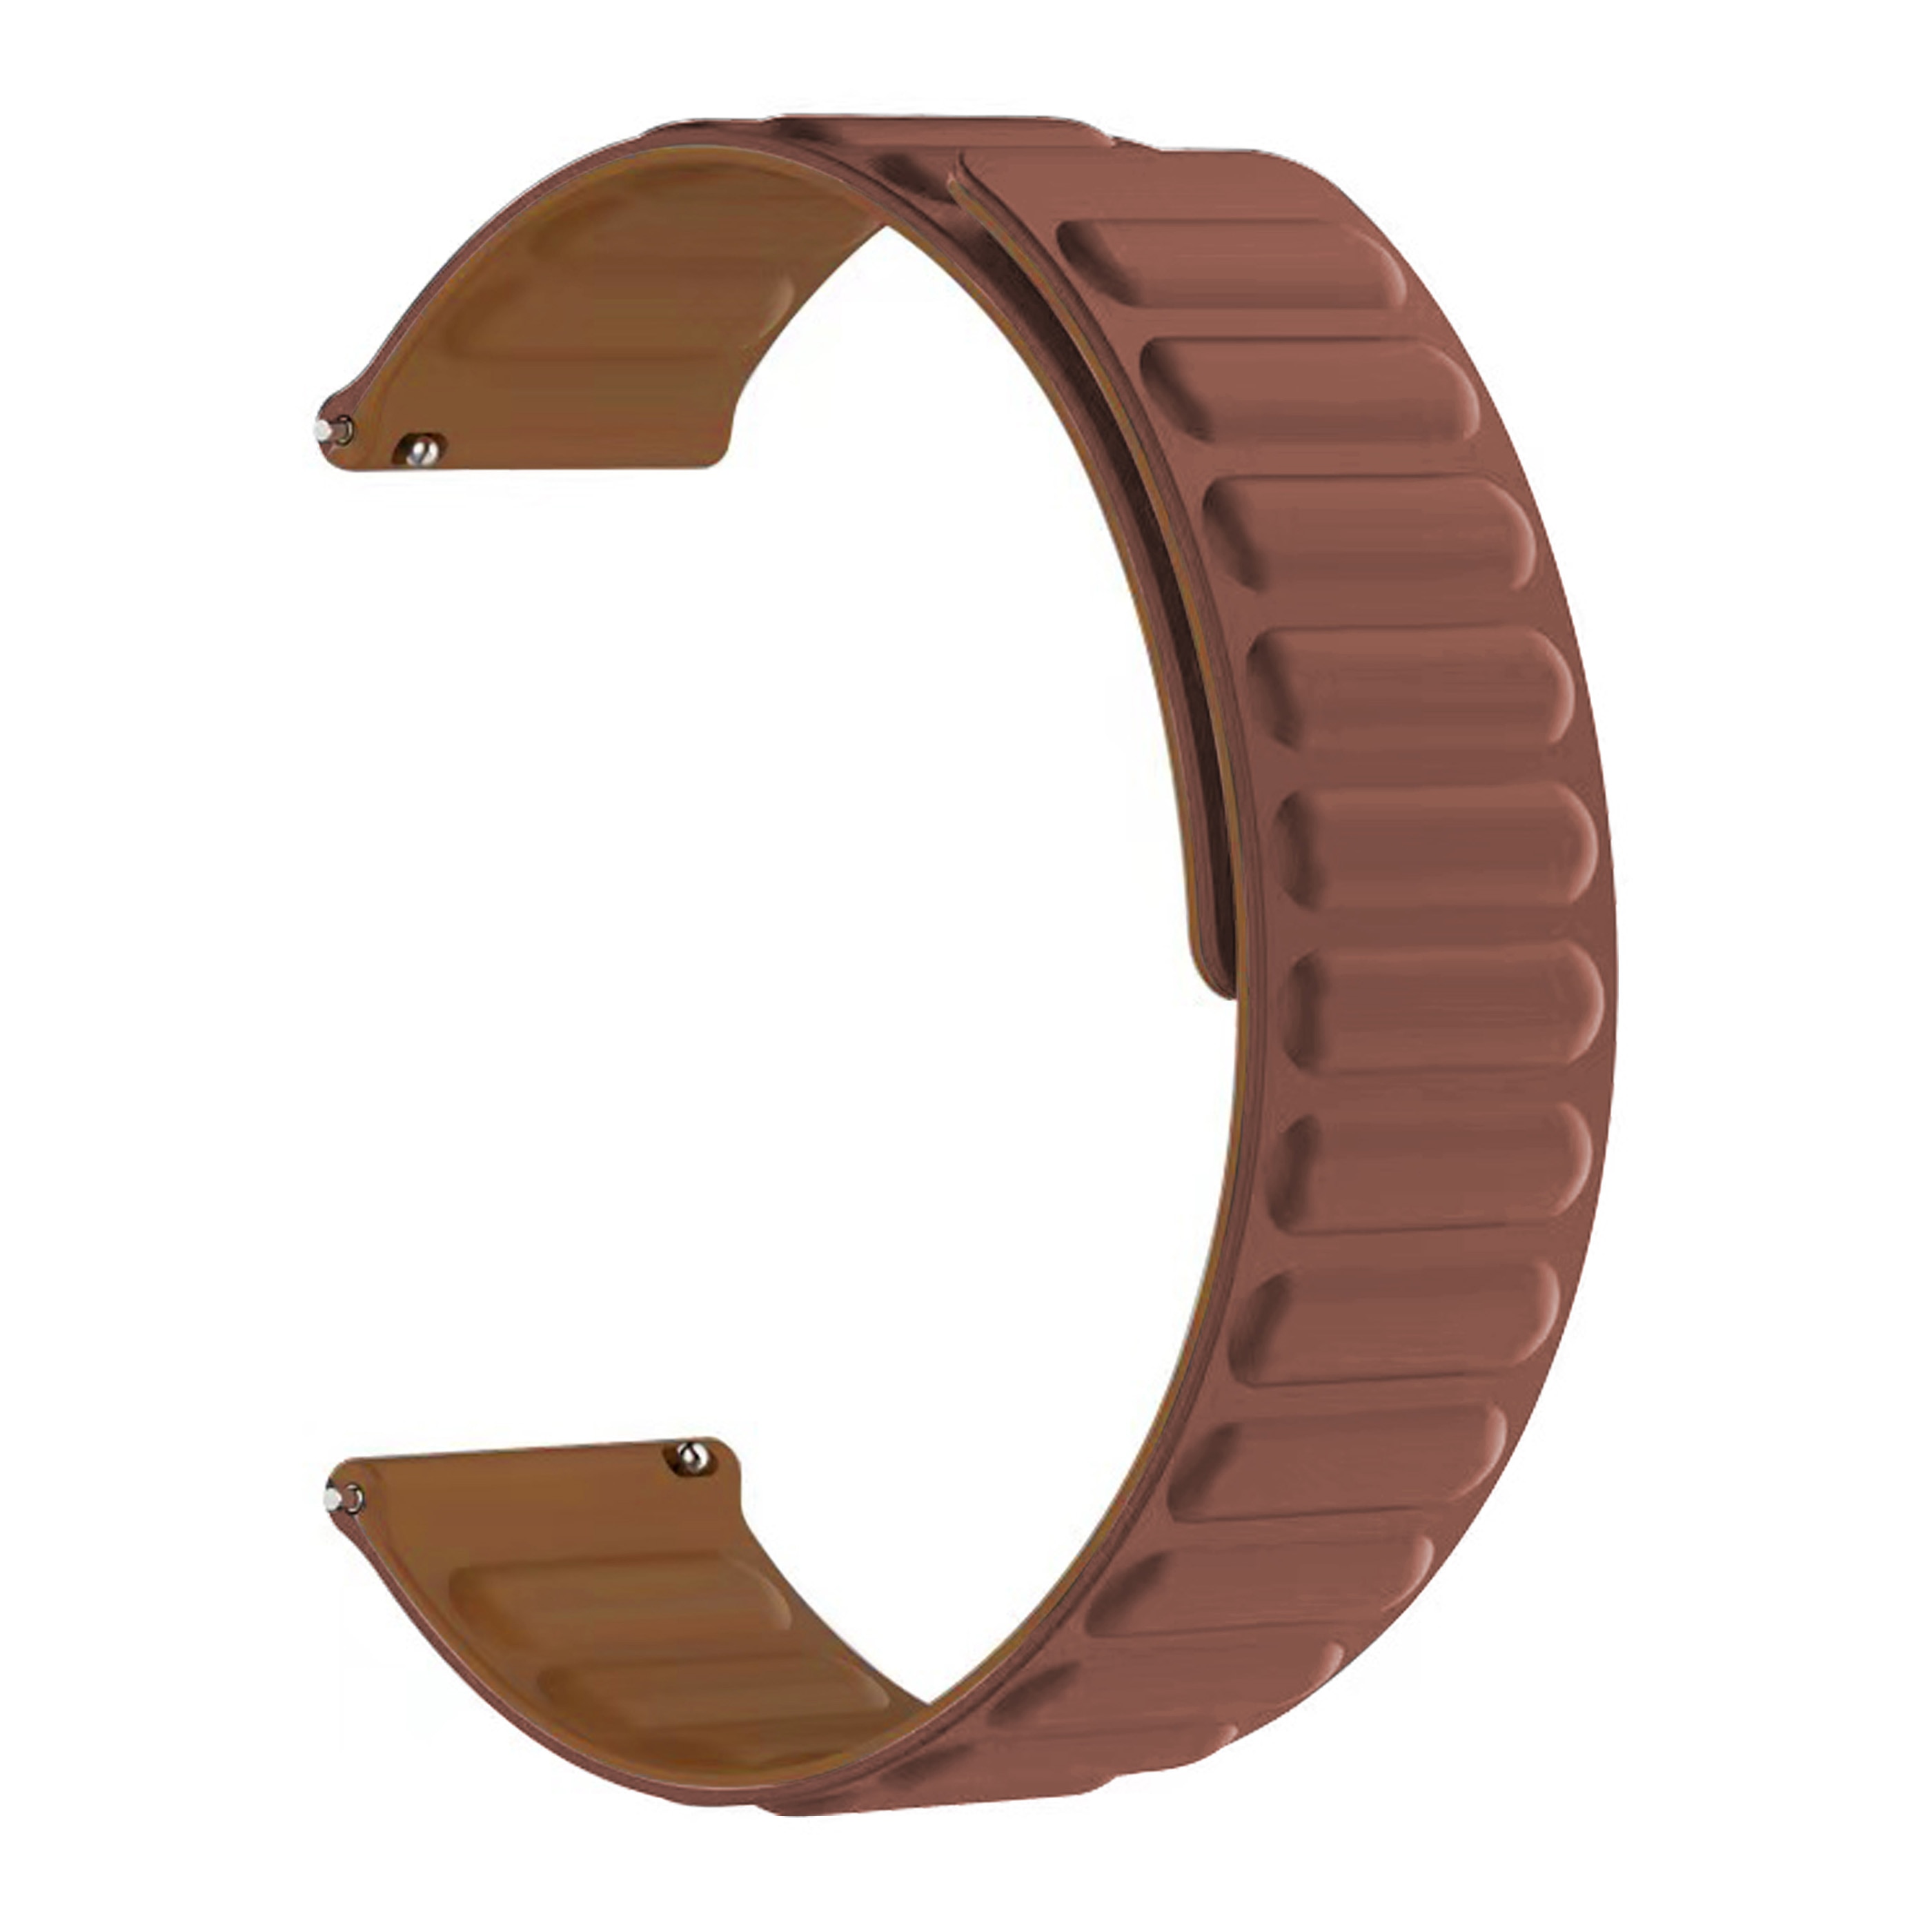 Mibro Watch A2 Magnetische Armband aus Silikon braun